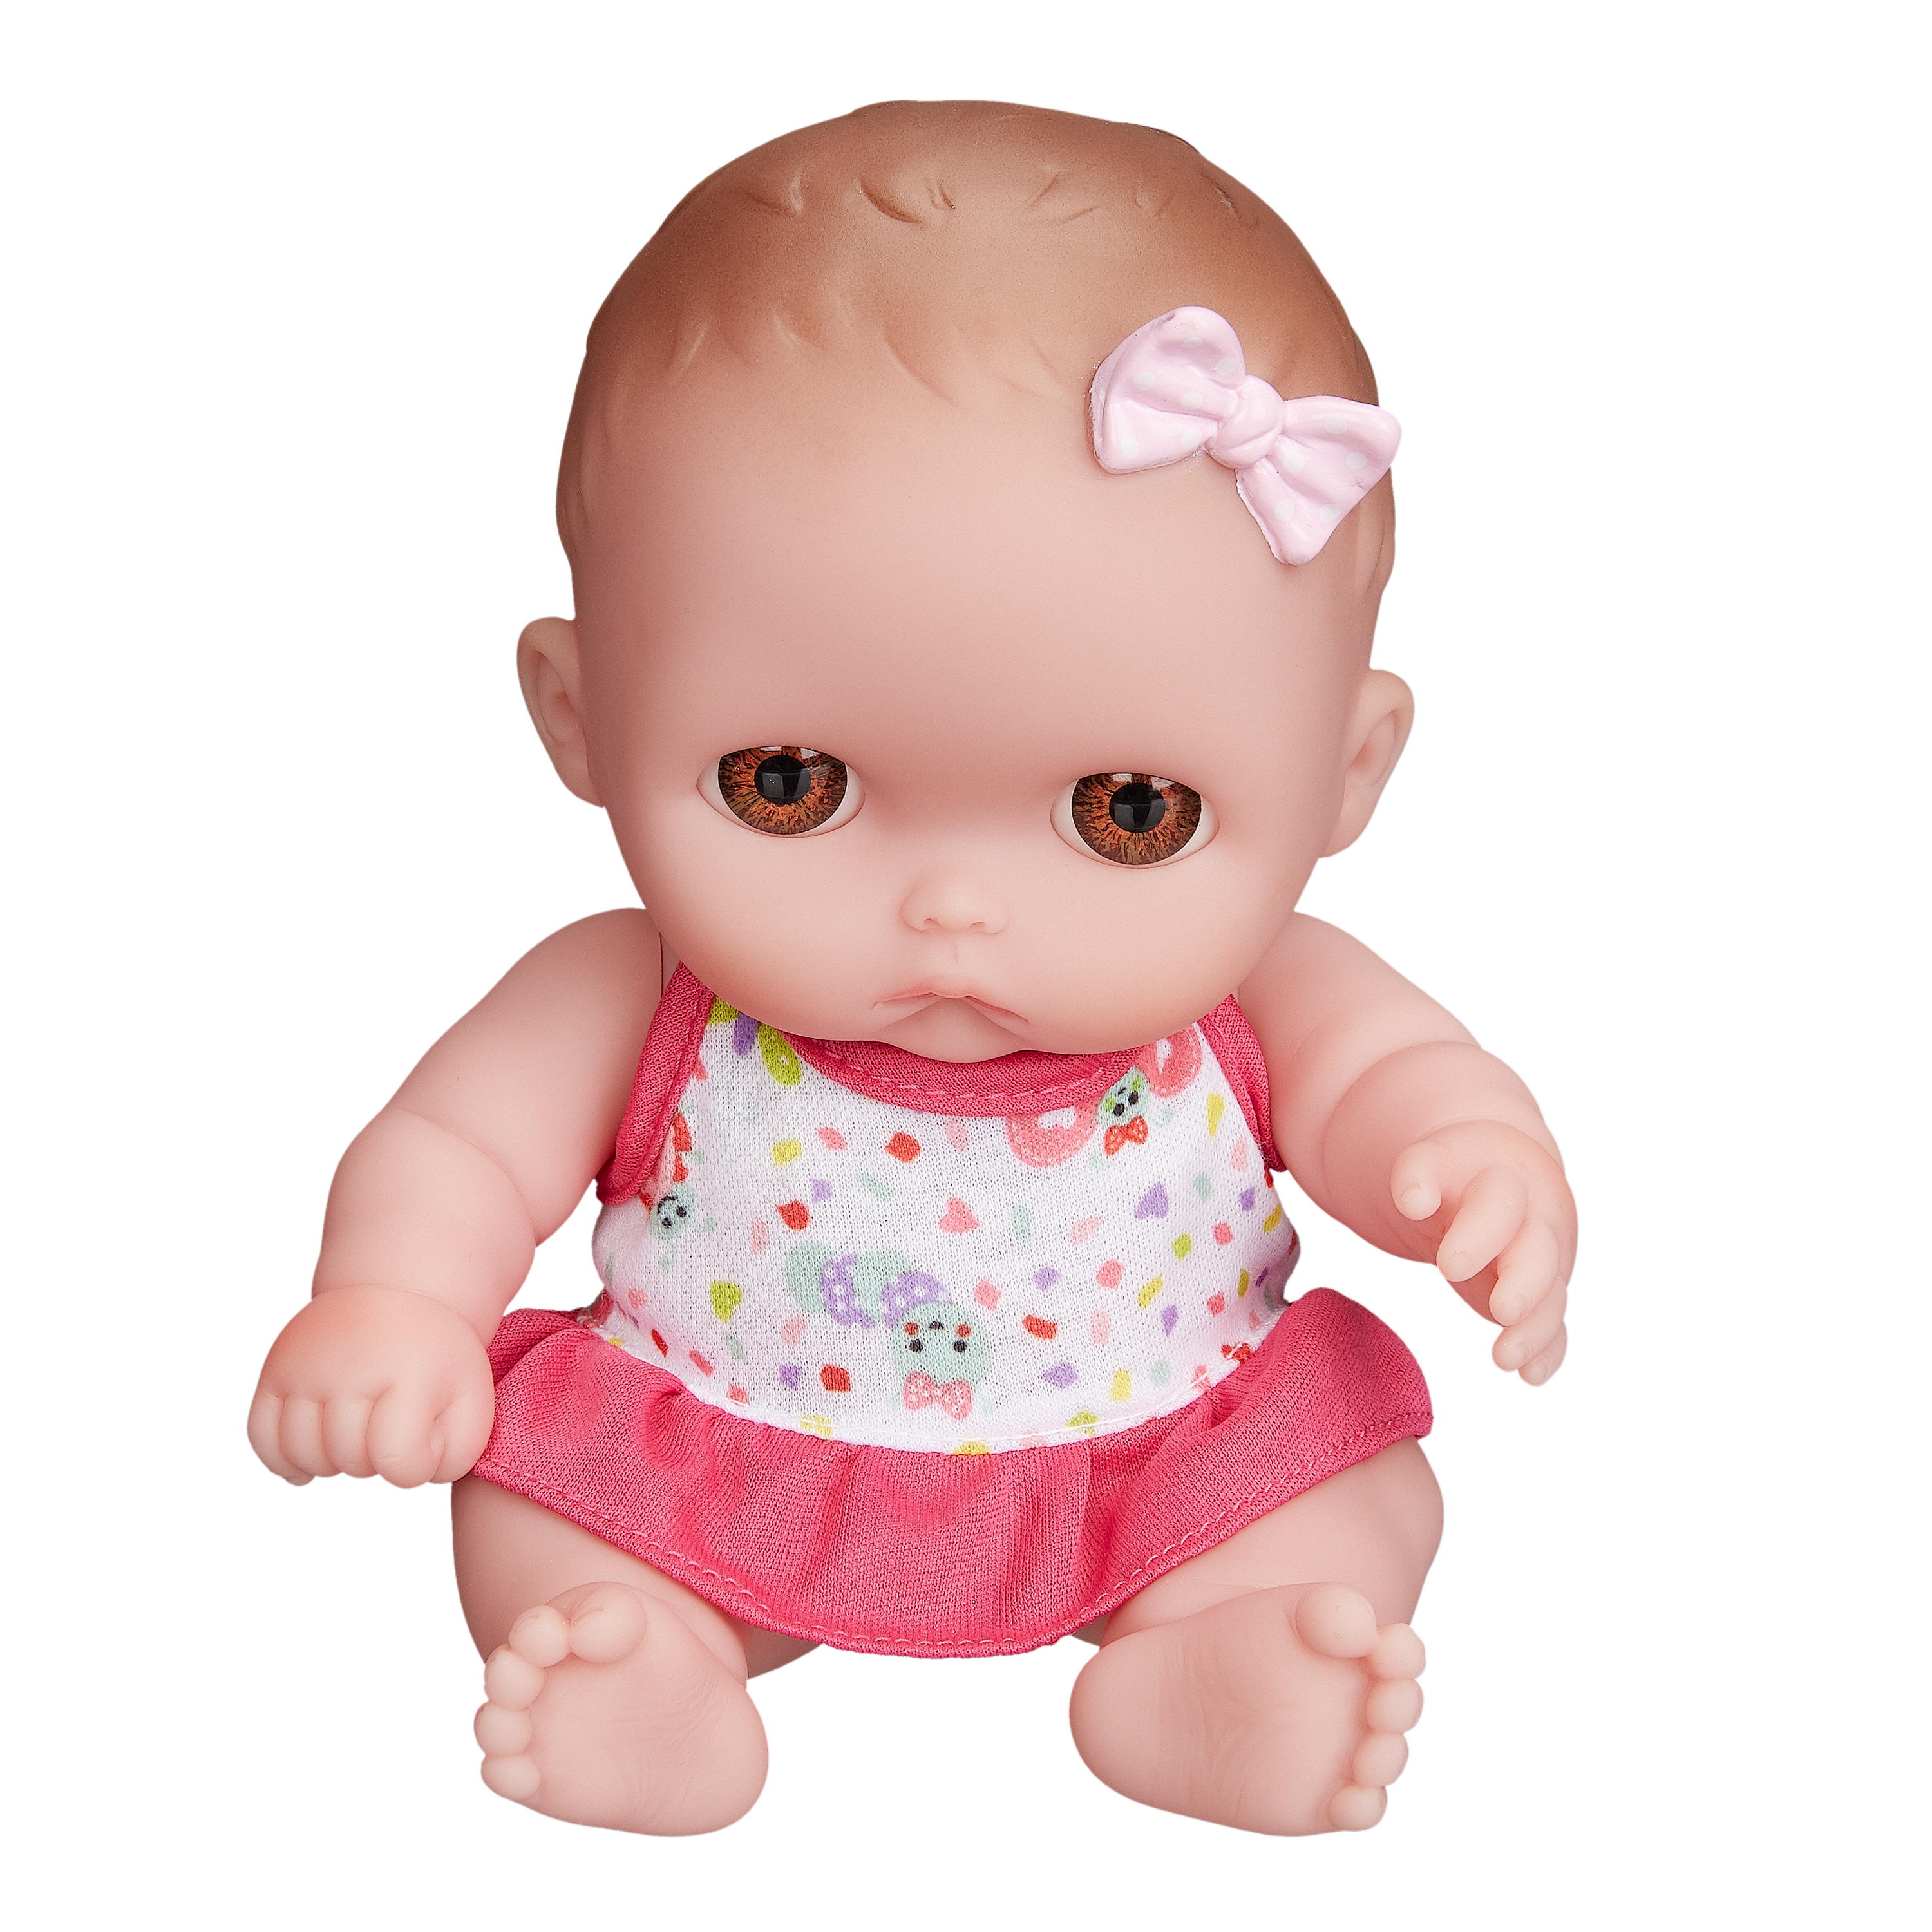 My Sweet Love Lil Cutesies 8.5" Baby Doll - image 1 of 4